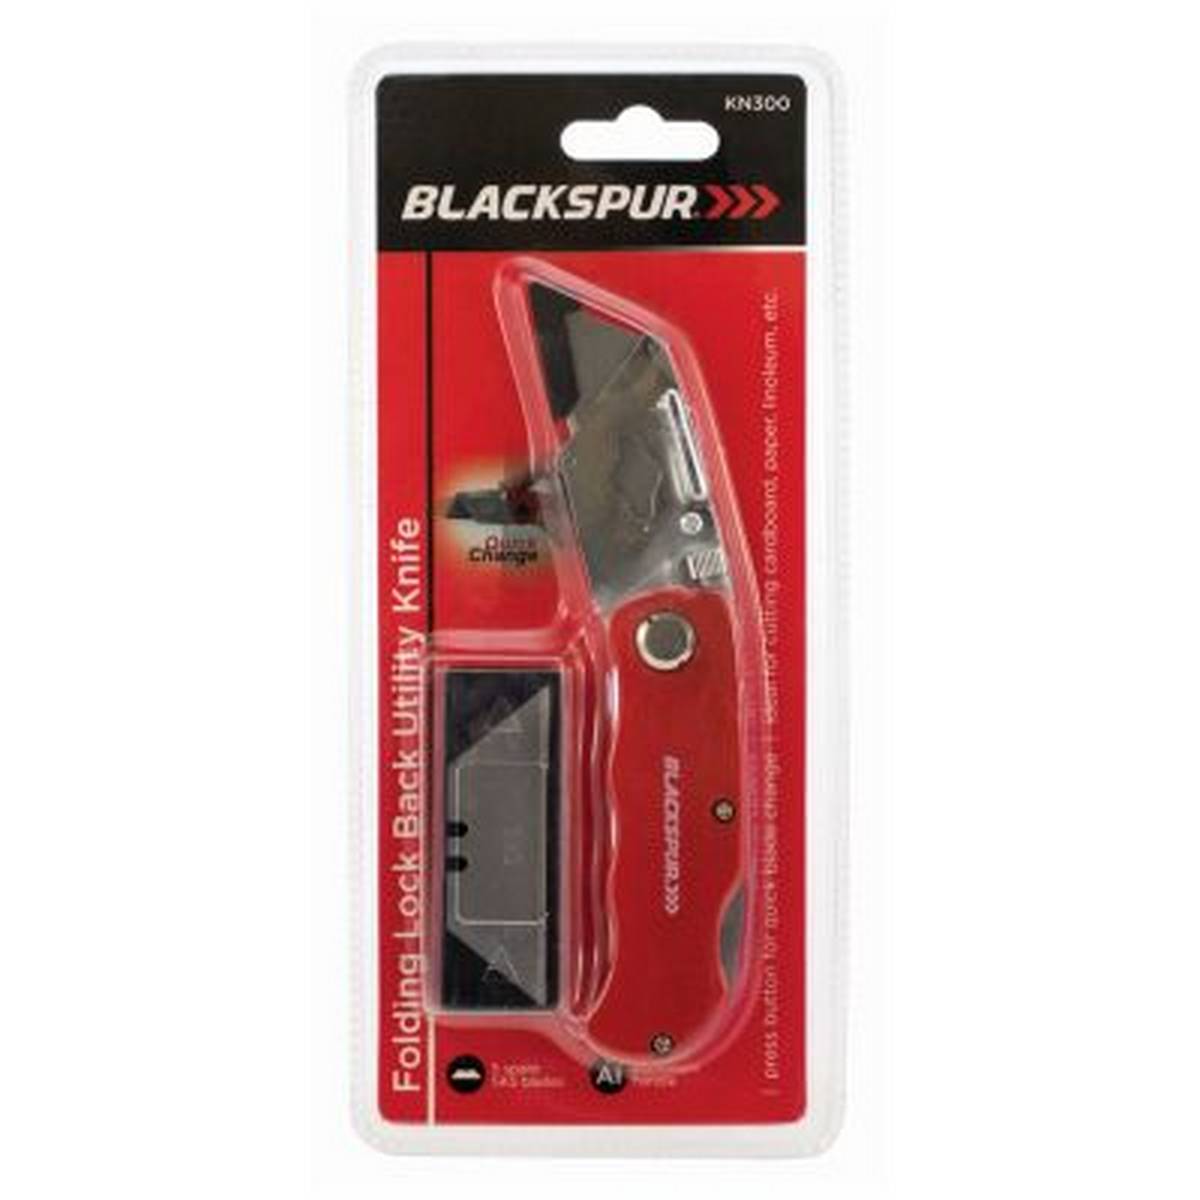 BLACKSPUR FOLDING LOCK BACK UTILITY KNIFE WITH 5 SPARE BLADES BB-KN300